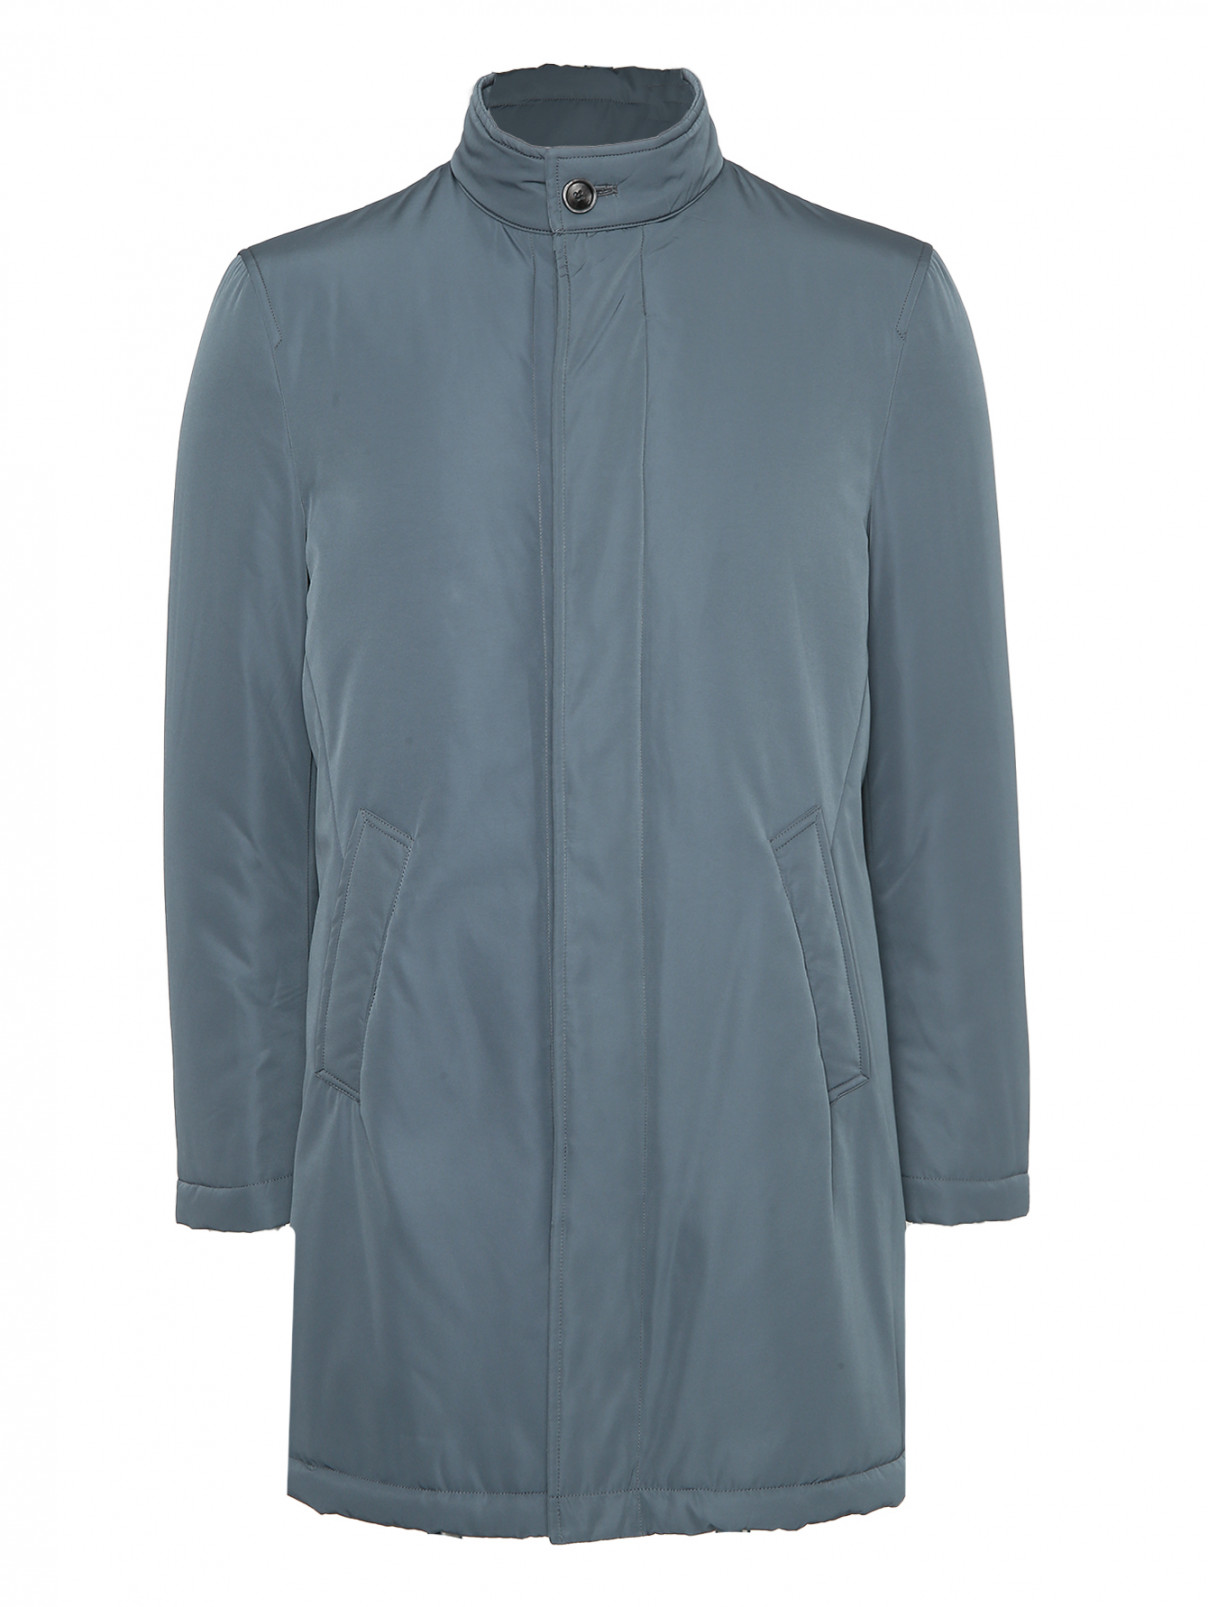 Куртка на пуговицах с карманами LARDINI  –  Общий вид  – Цвет:  Серый